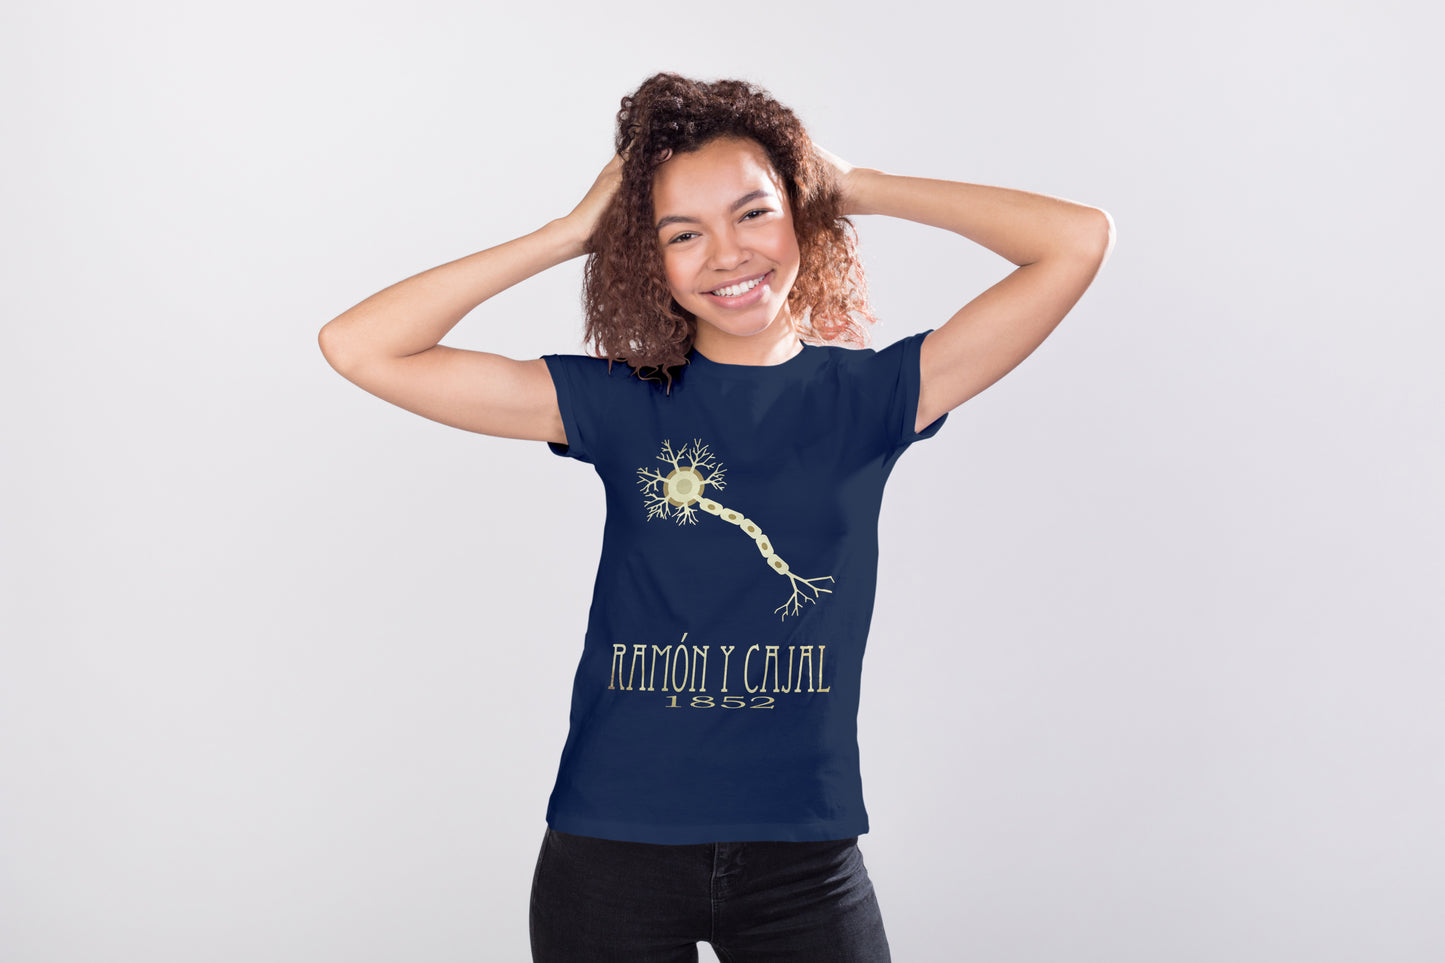 Ramón y Cajal Neuroscience T-shirt, Brain Neuron Graphic Tee